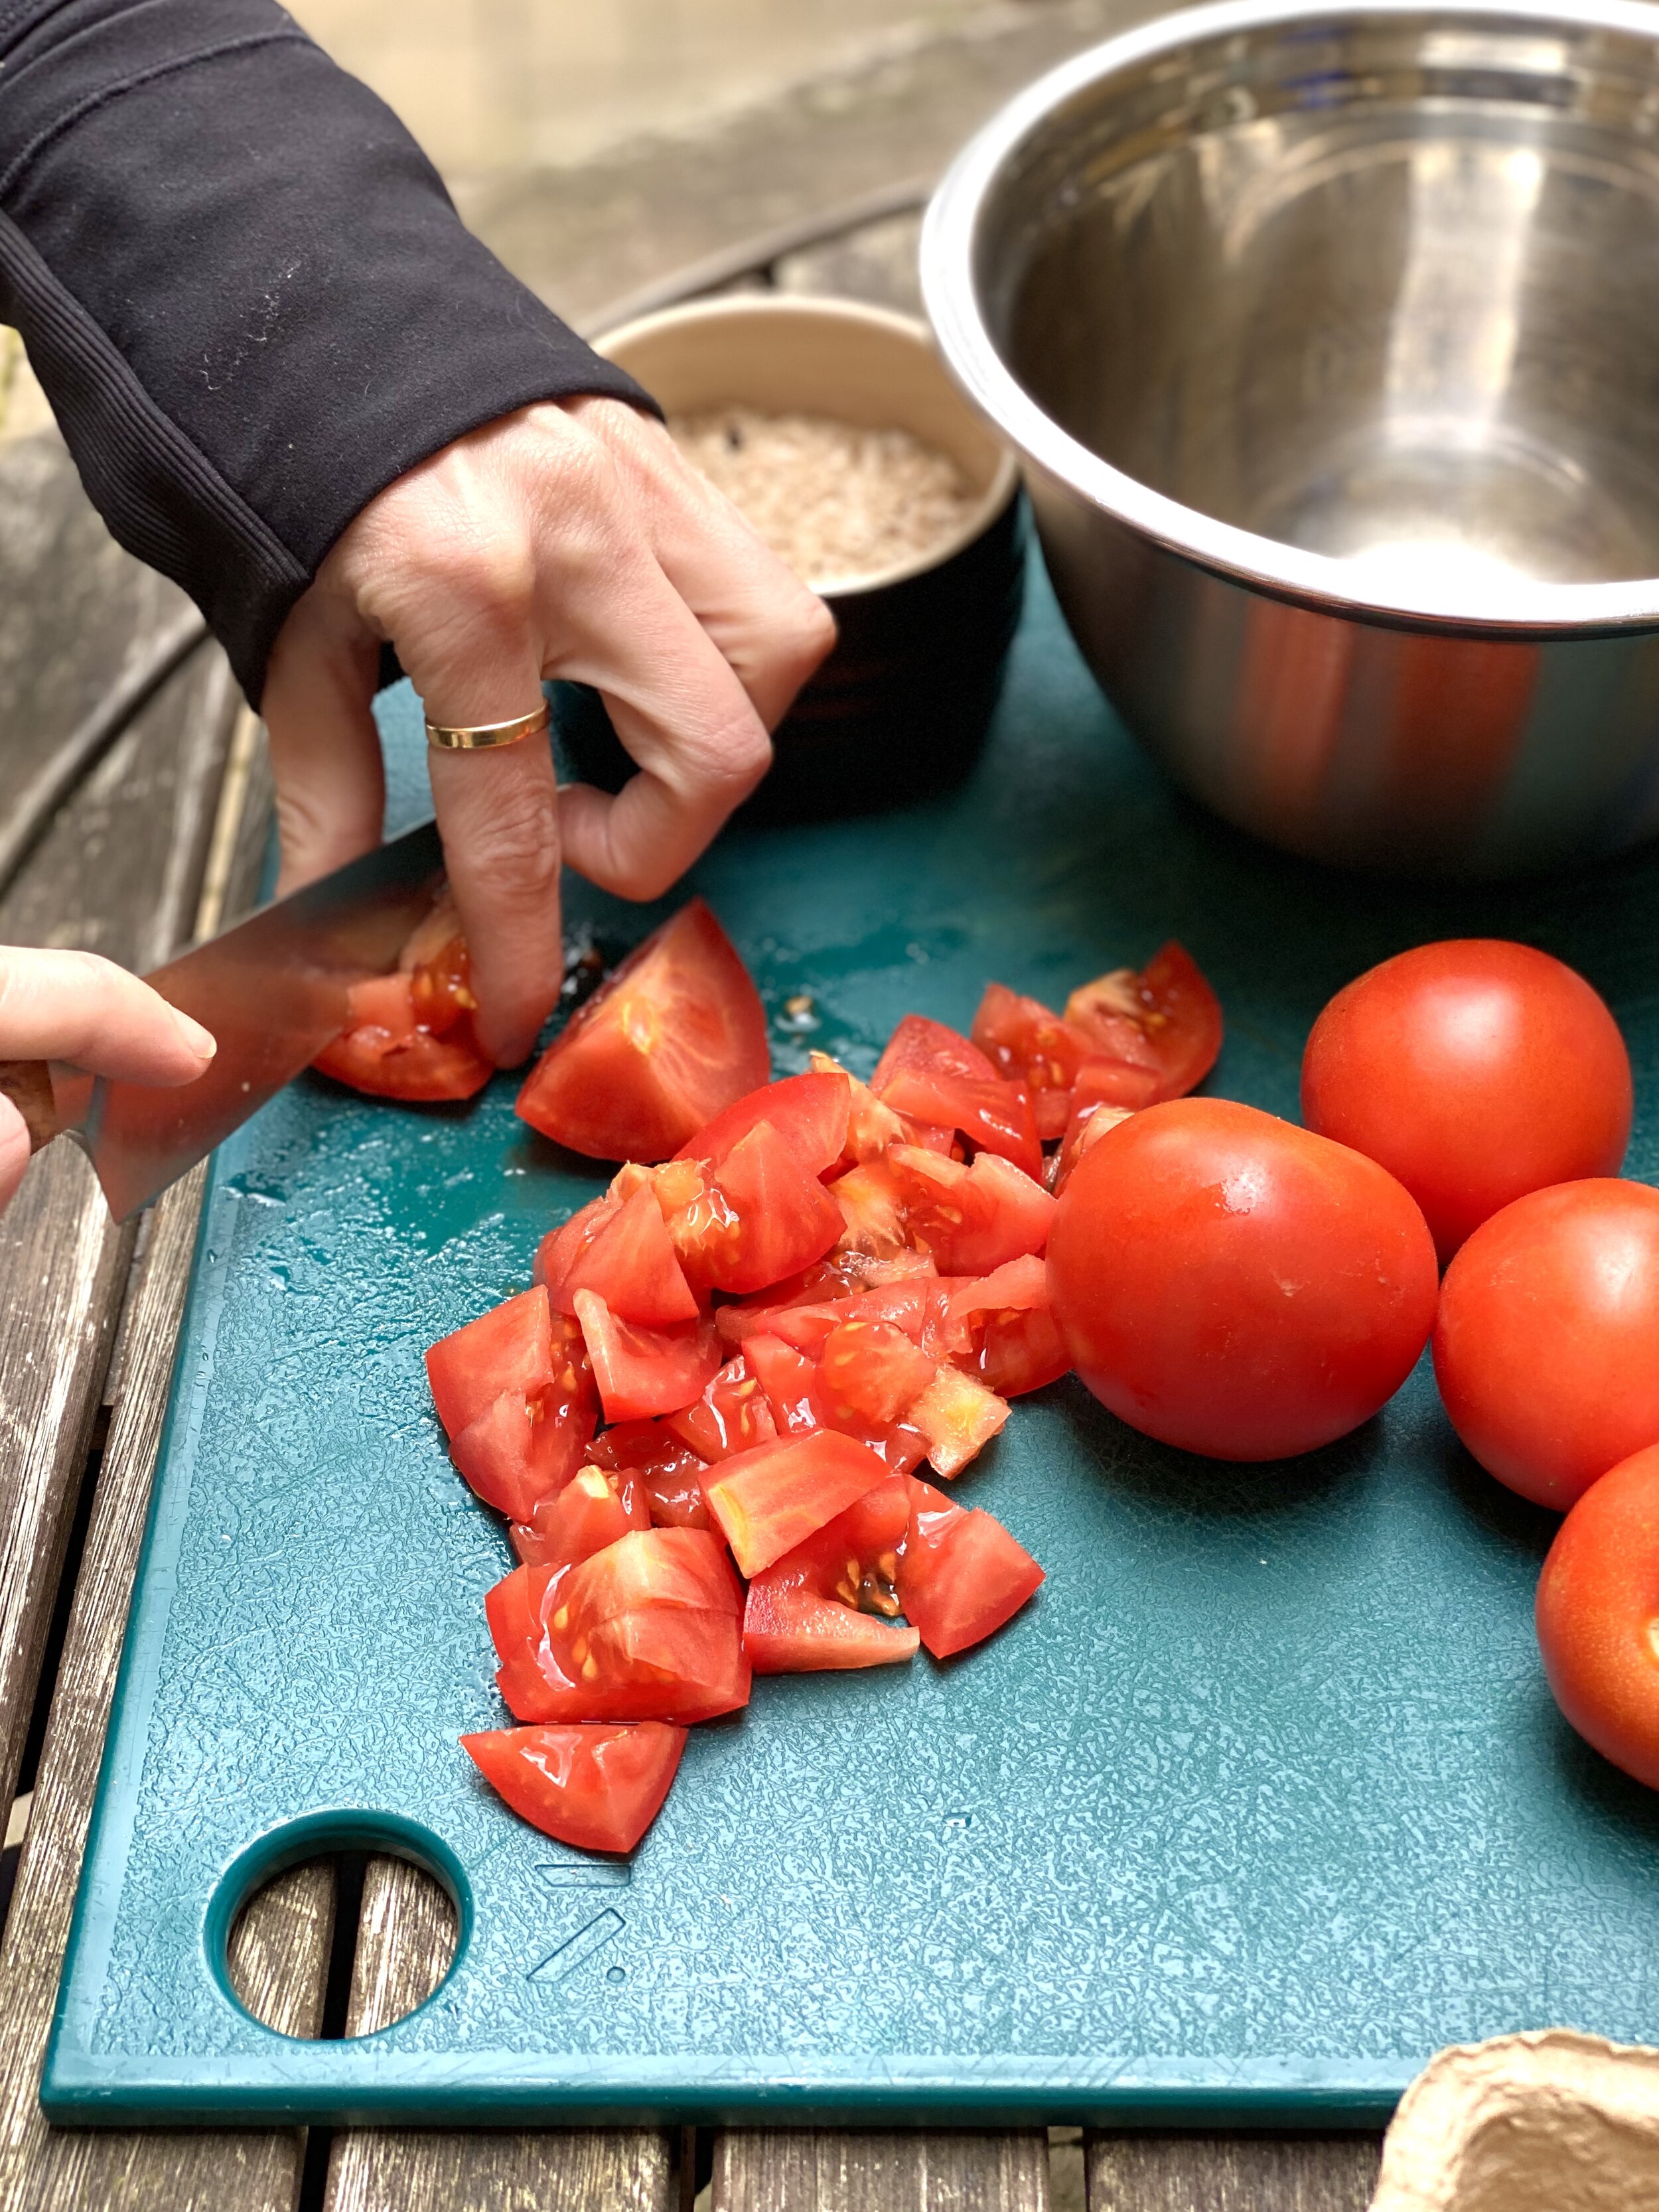 Katy cutting tomatoes